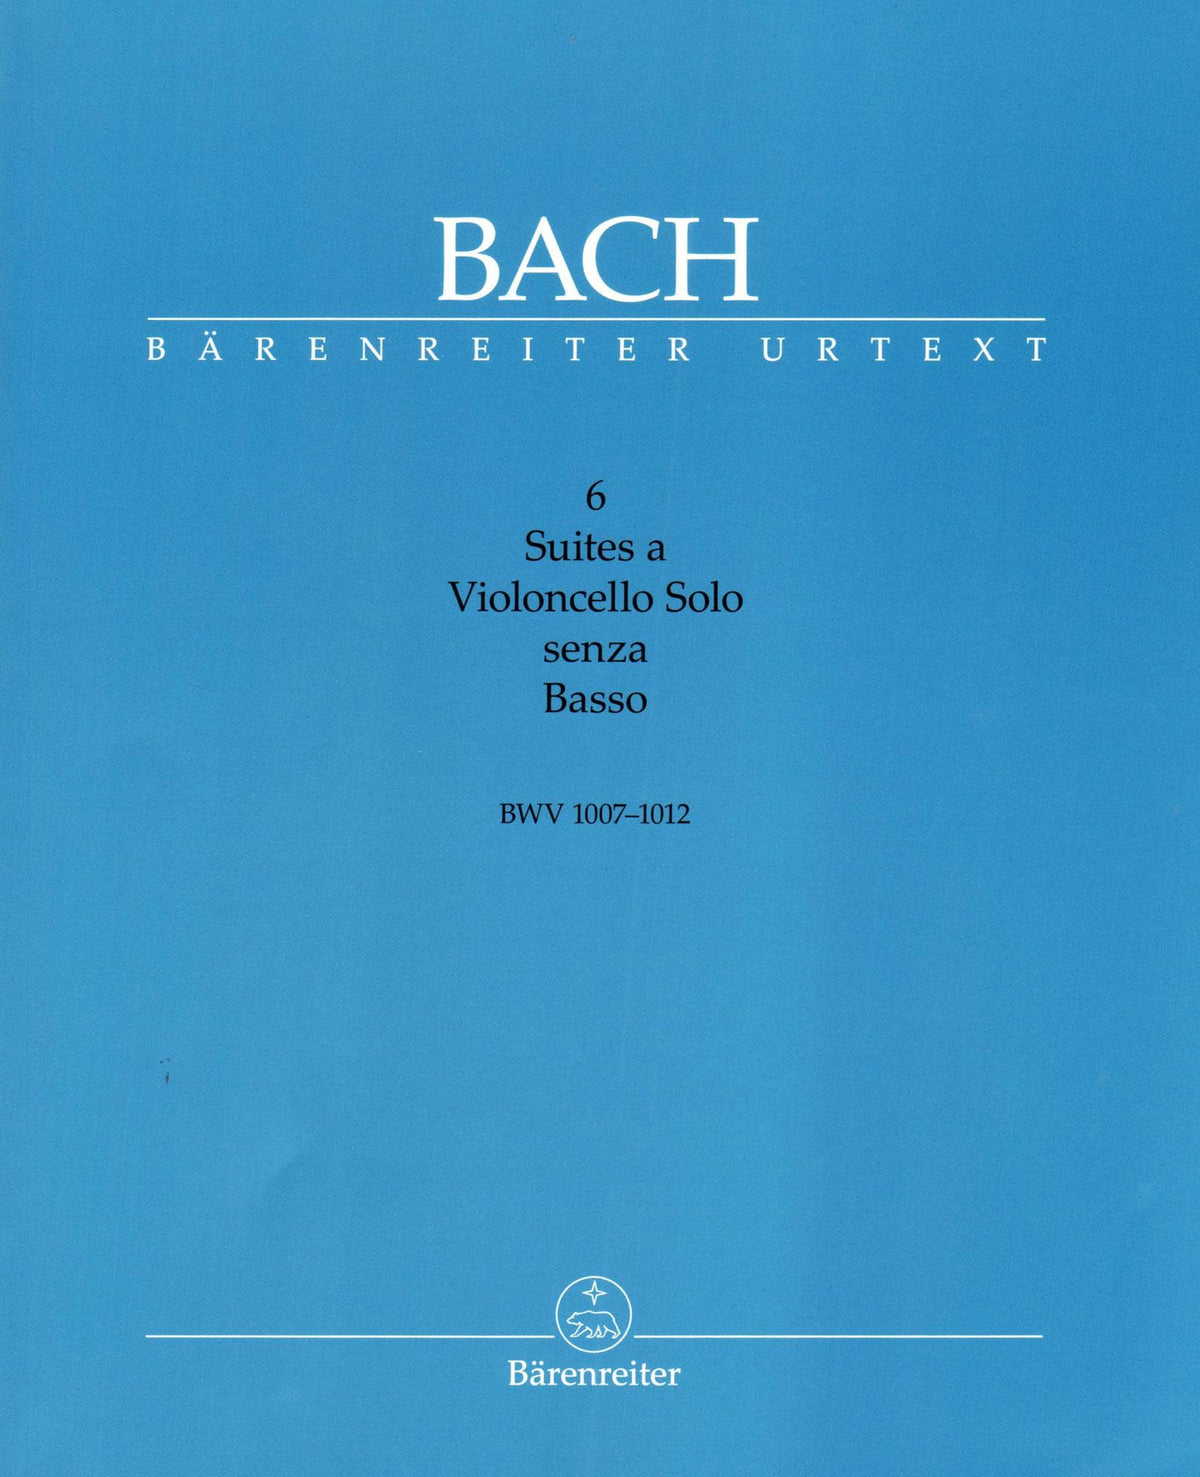 Bach, JS - 6 Suites BWV 1007 1012 for Cello - Arranged by Schwemer/Woodfull-Harris - Barenreiter Verlag URTEXT Edition